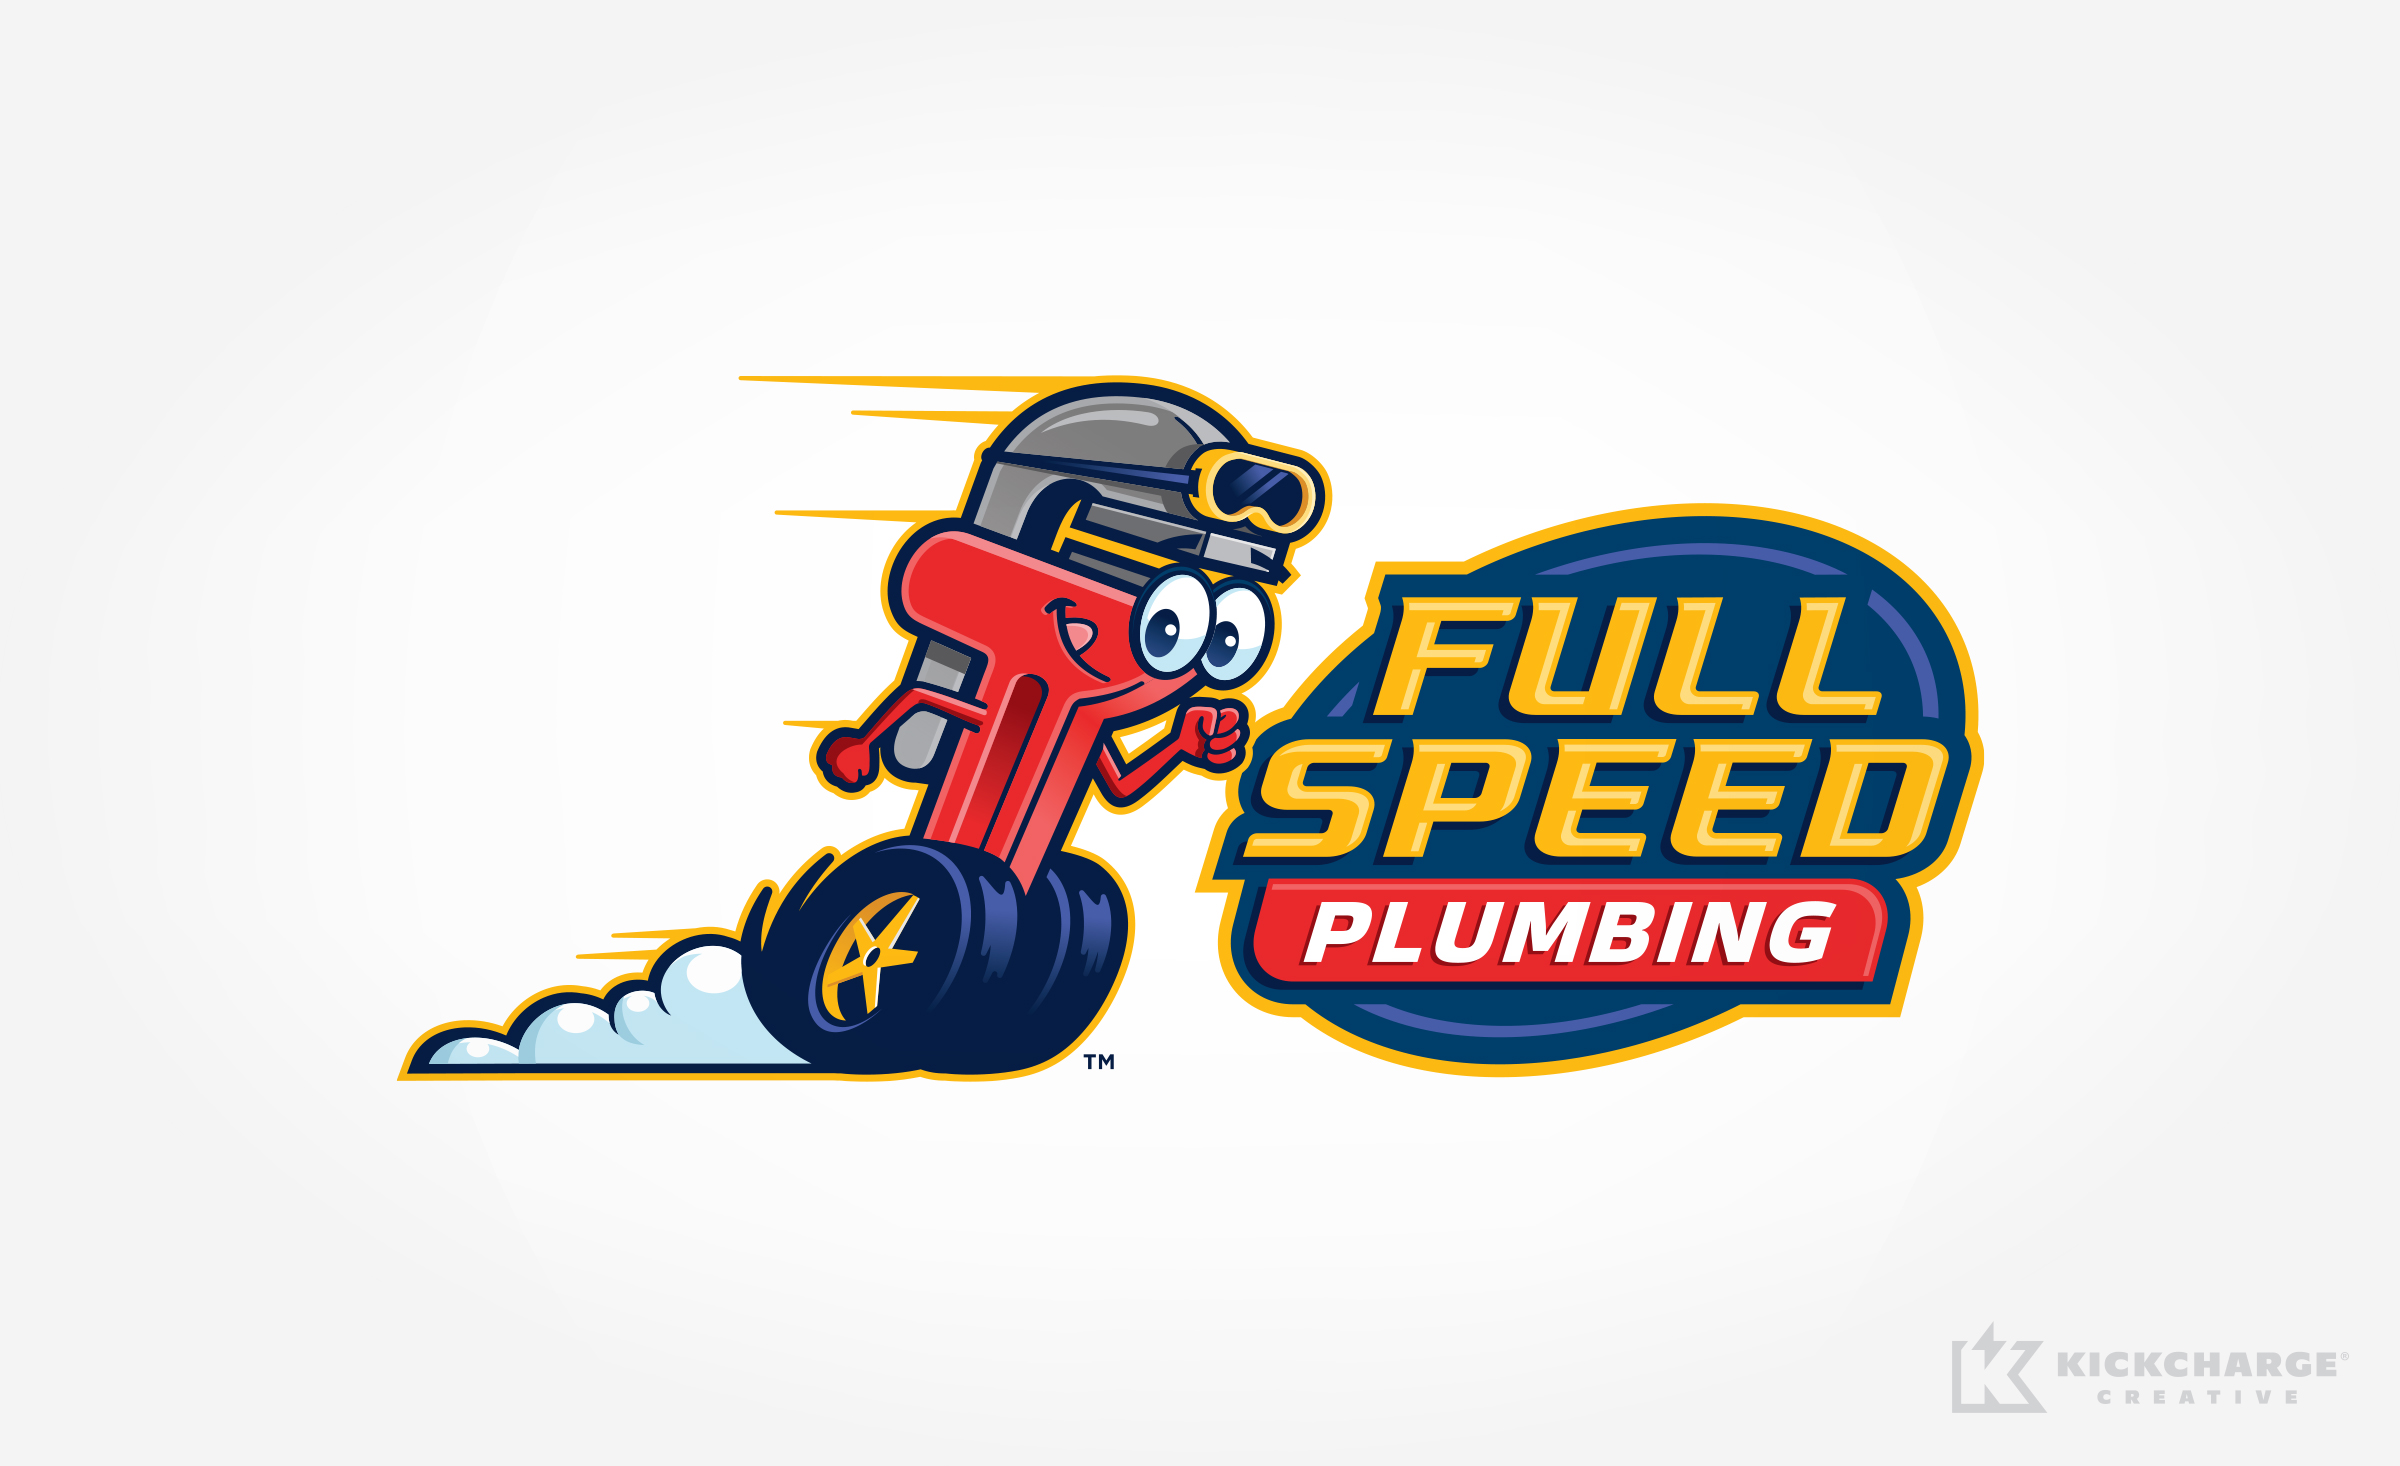 plumbing logo for Full Speed Plumbing